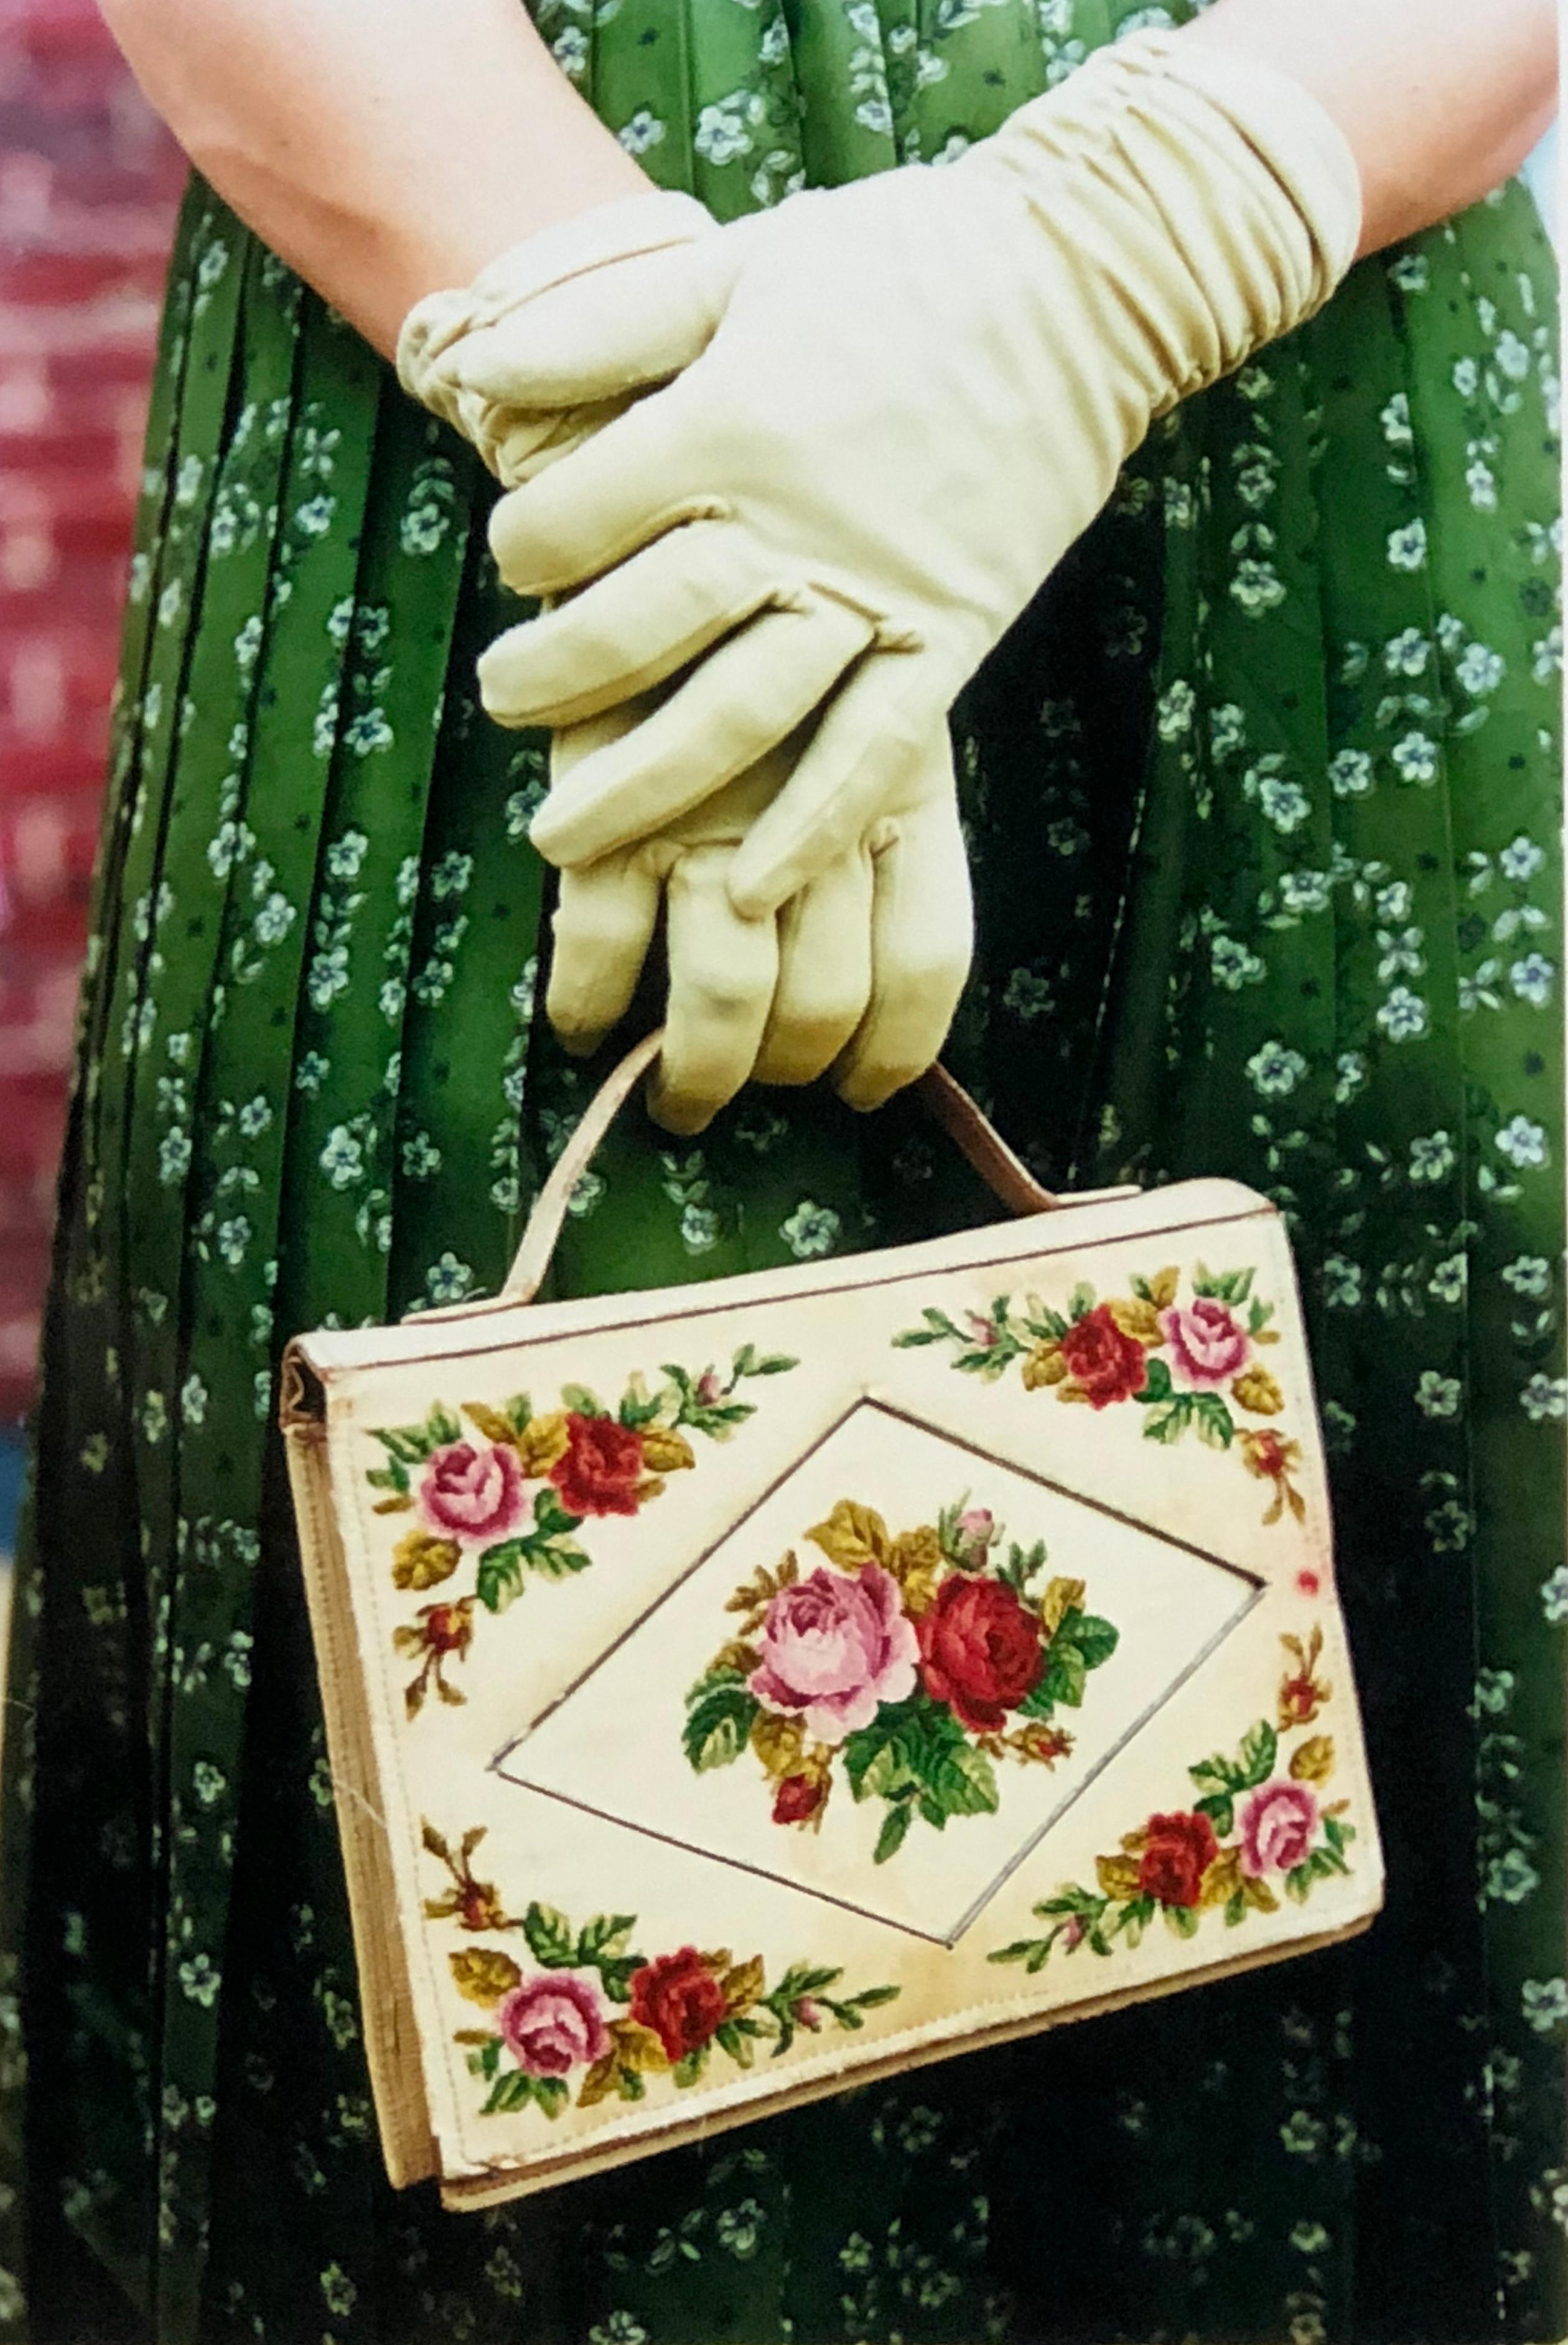 Richard Heeps Color Photograph - Gloves & Handbag, Goodwood, Chichester - Feminine fashion, color photography